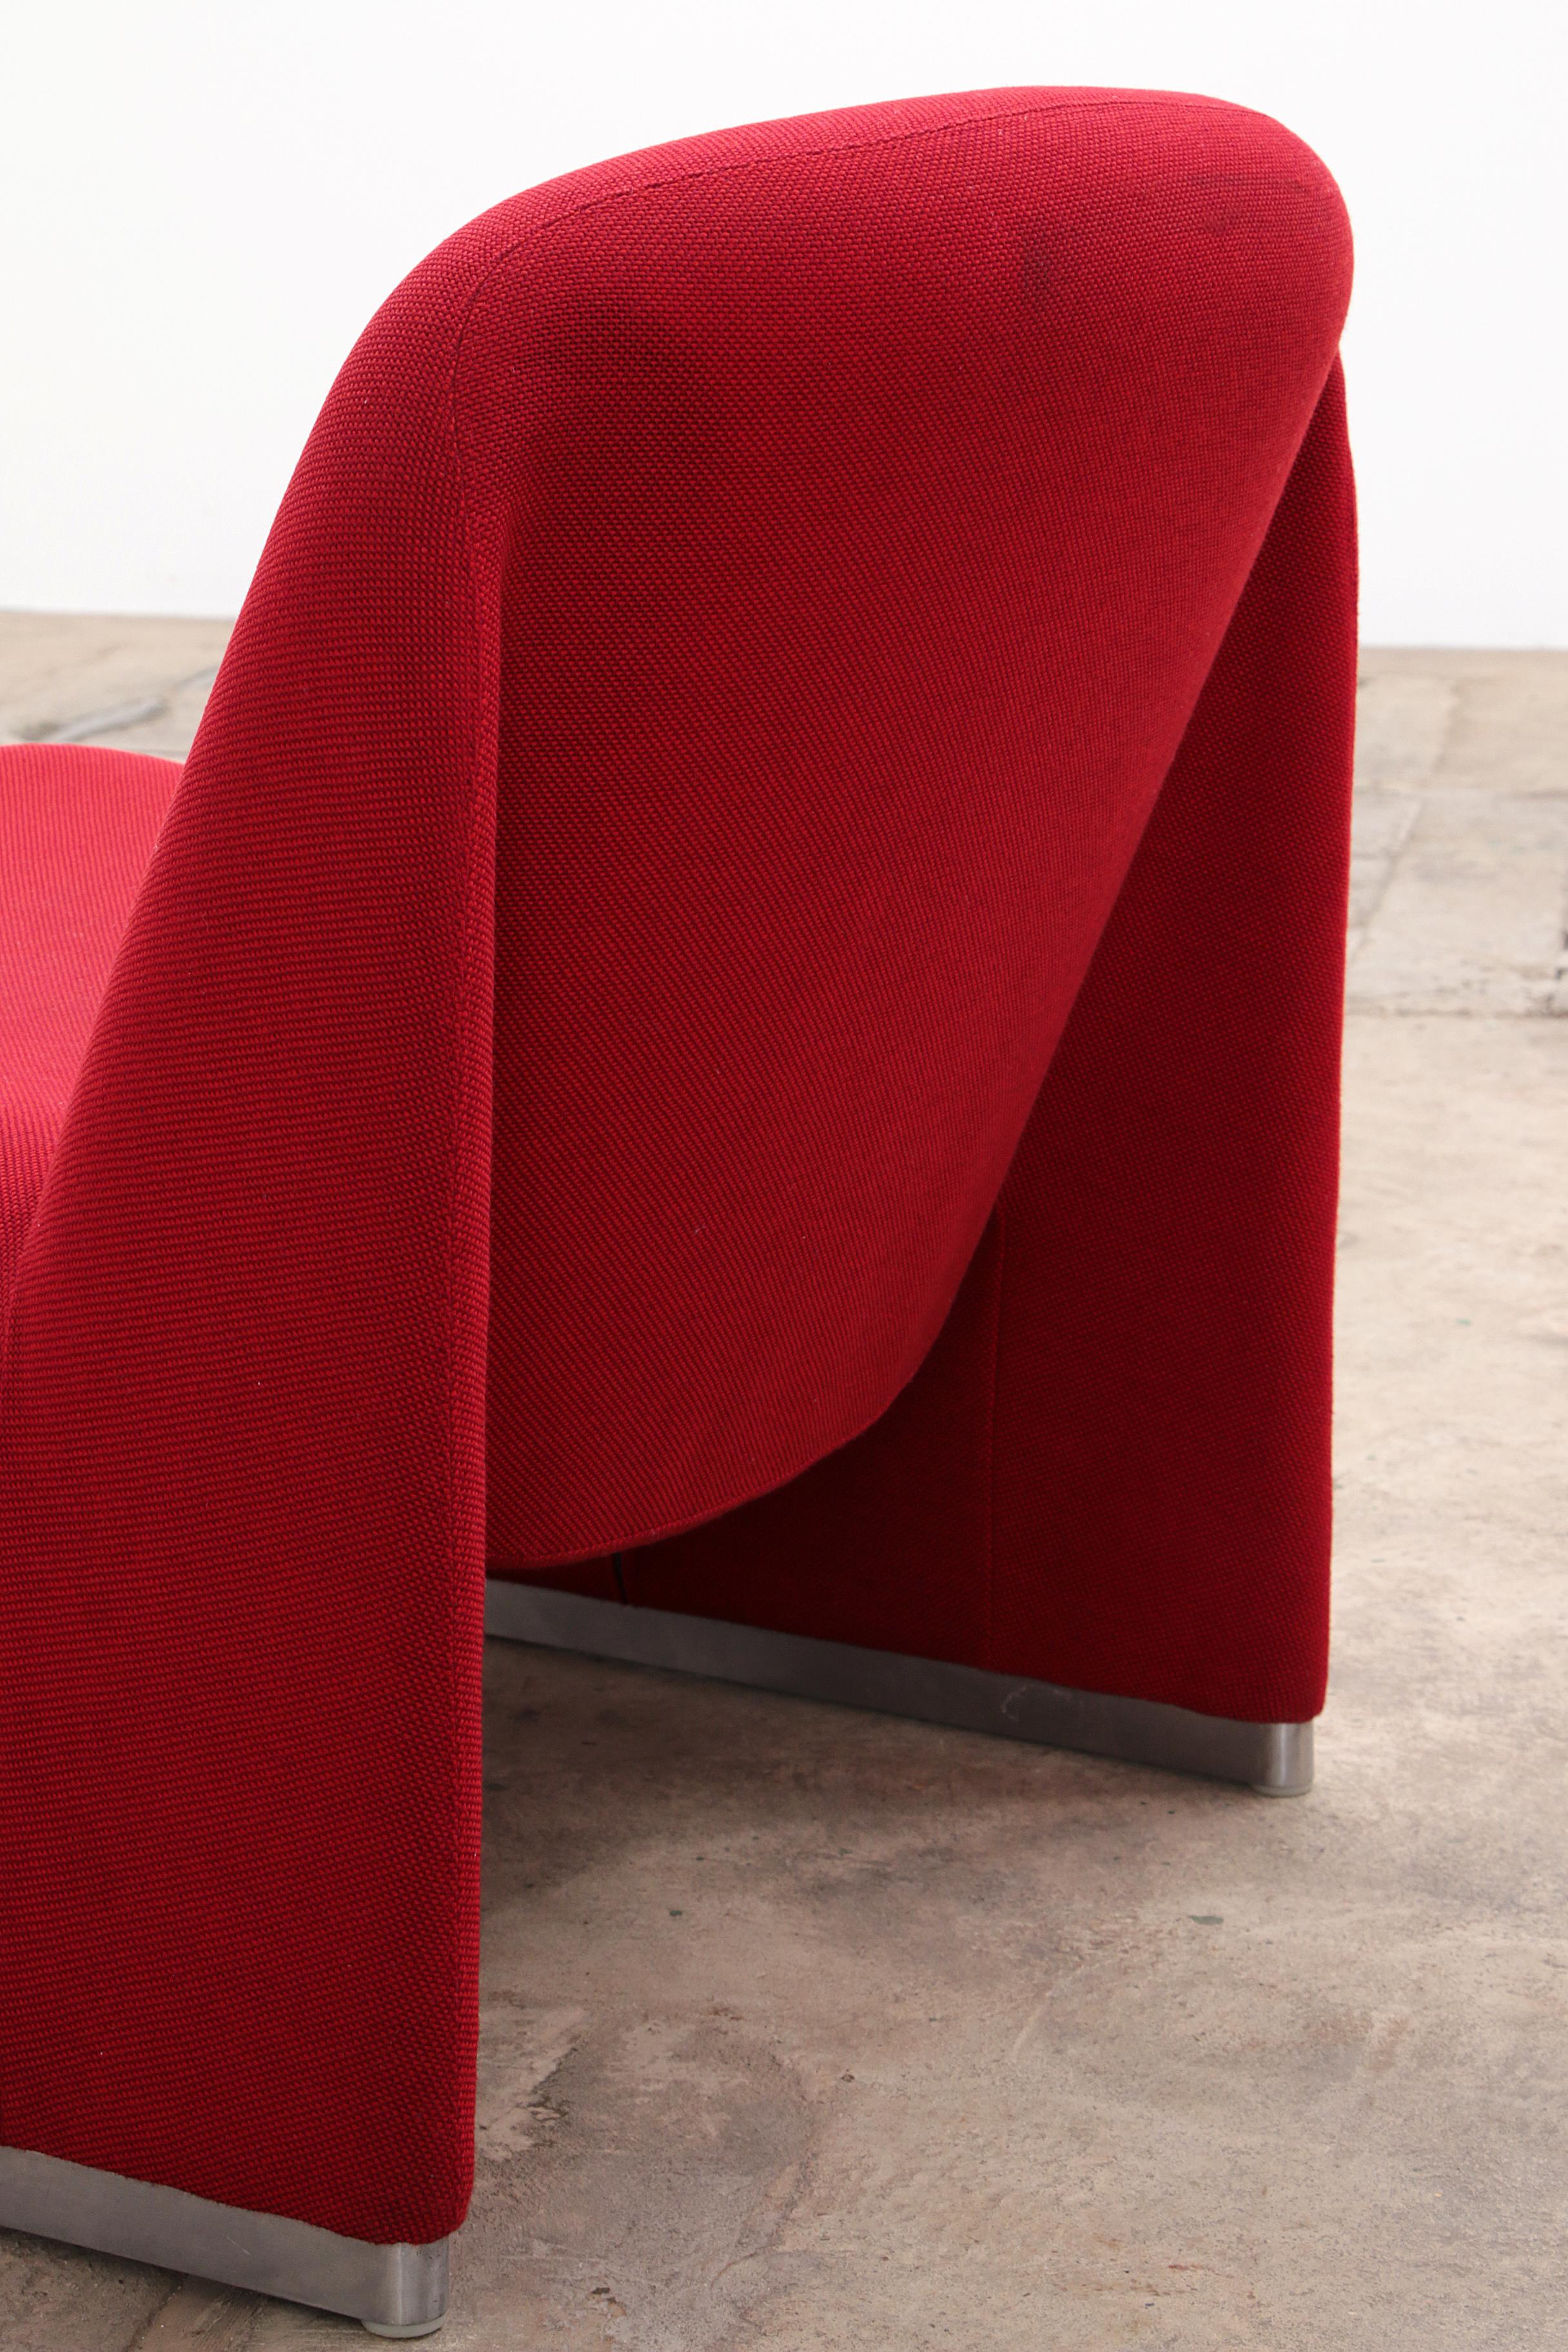 Artifort Alky chair Set Design by Giancario Piretti, 1960 6